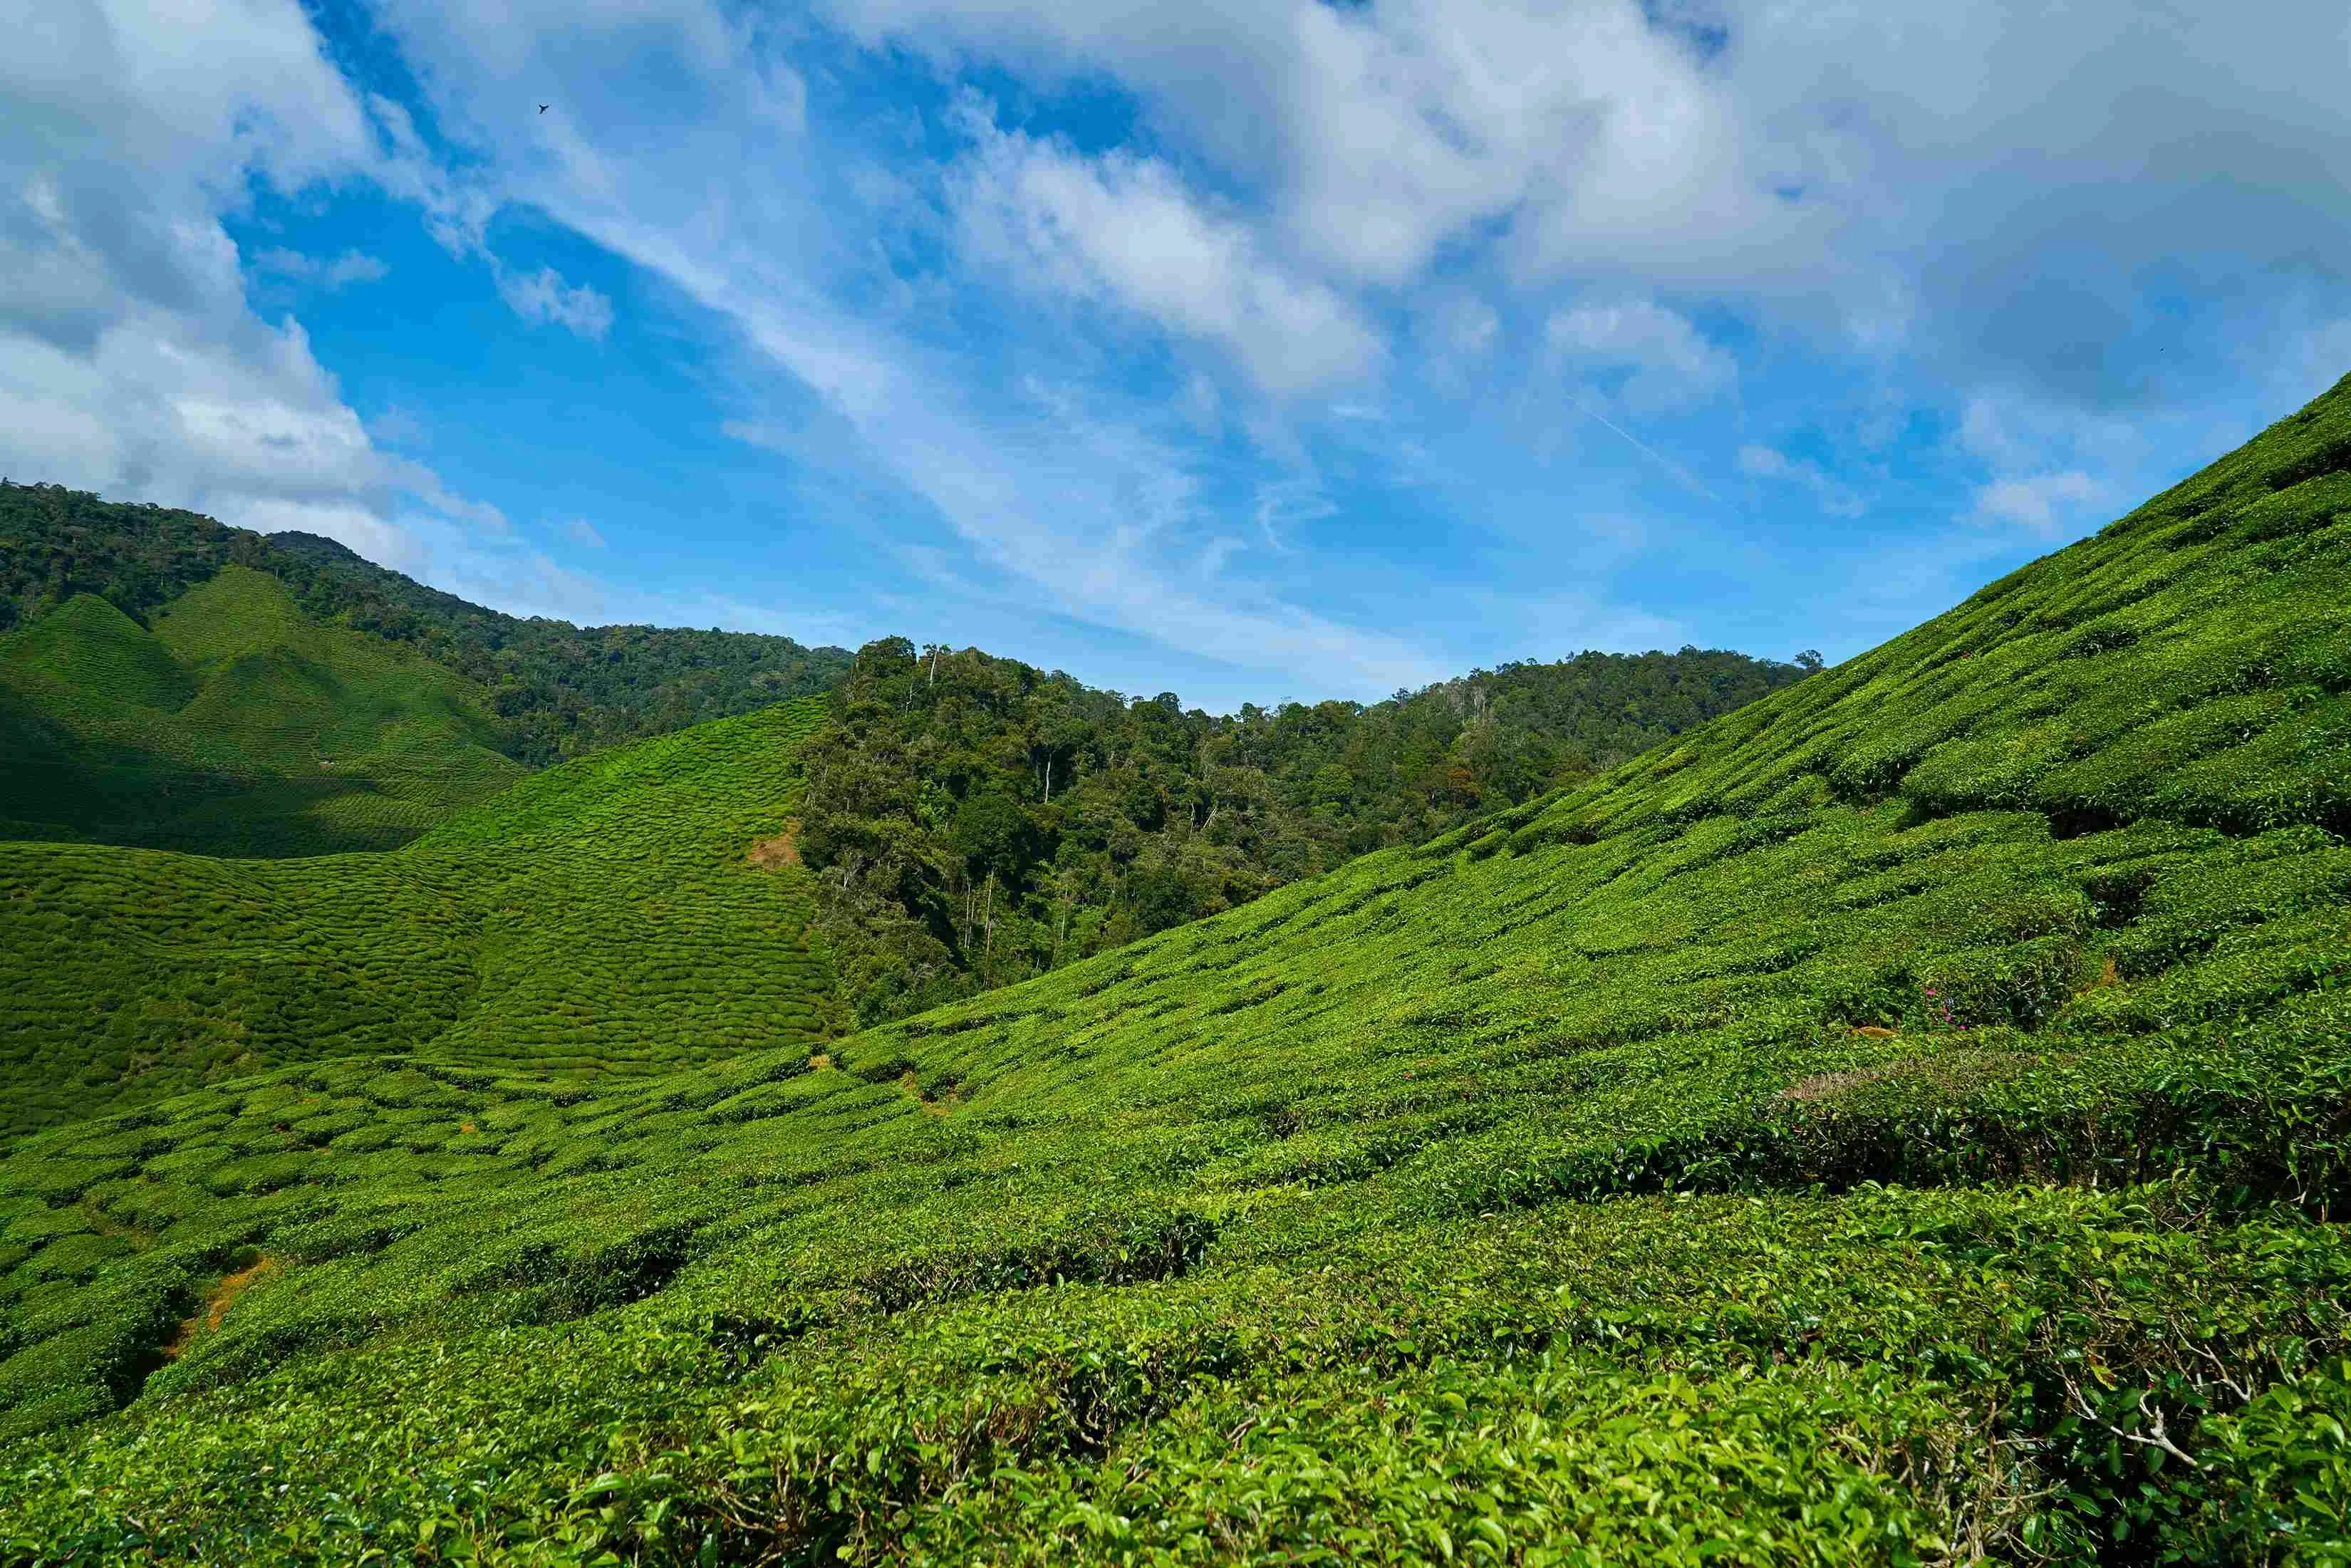 Wayanad Tour: Discover Kerala's Hidden Gem with Vast Green Tea Plantations